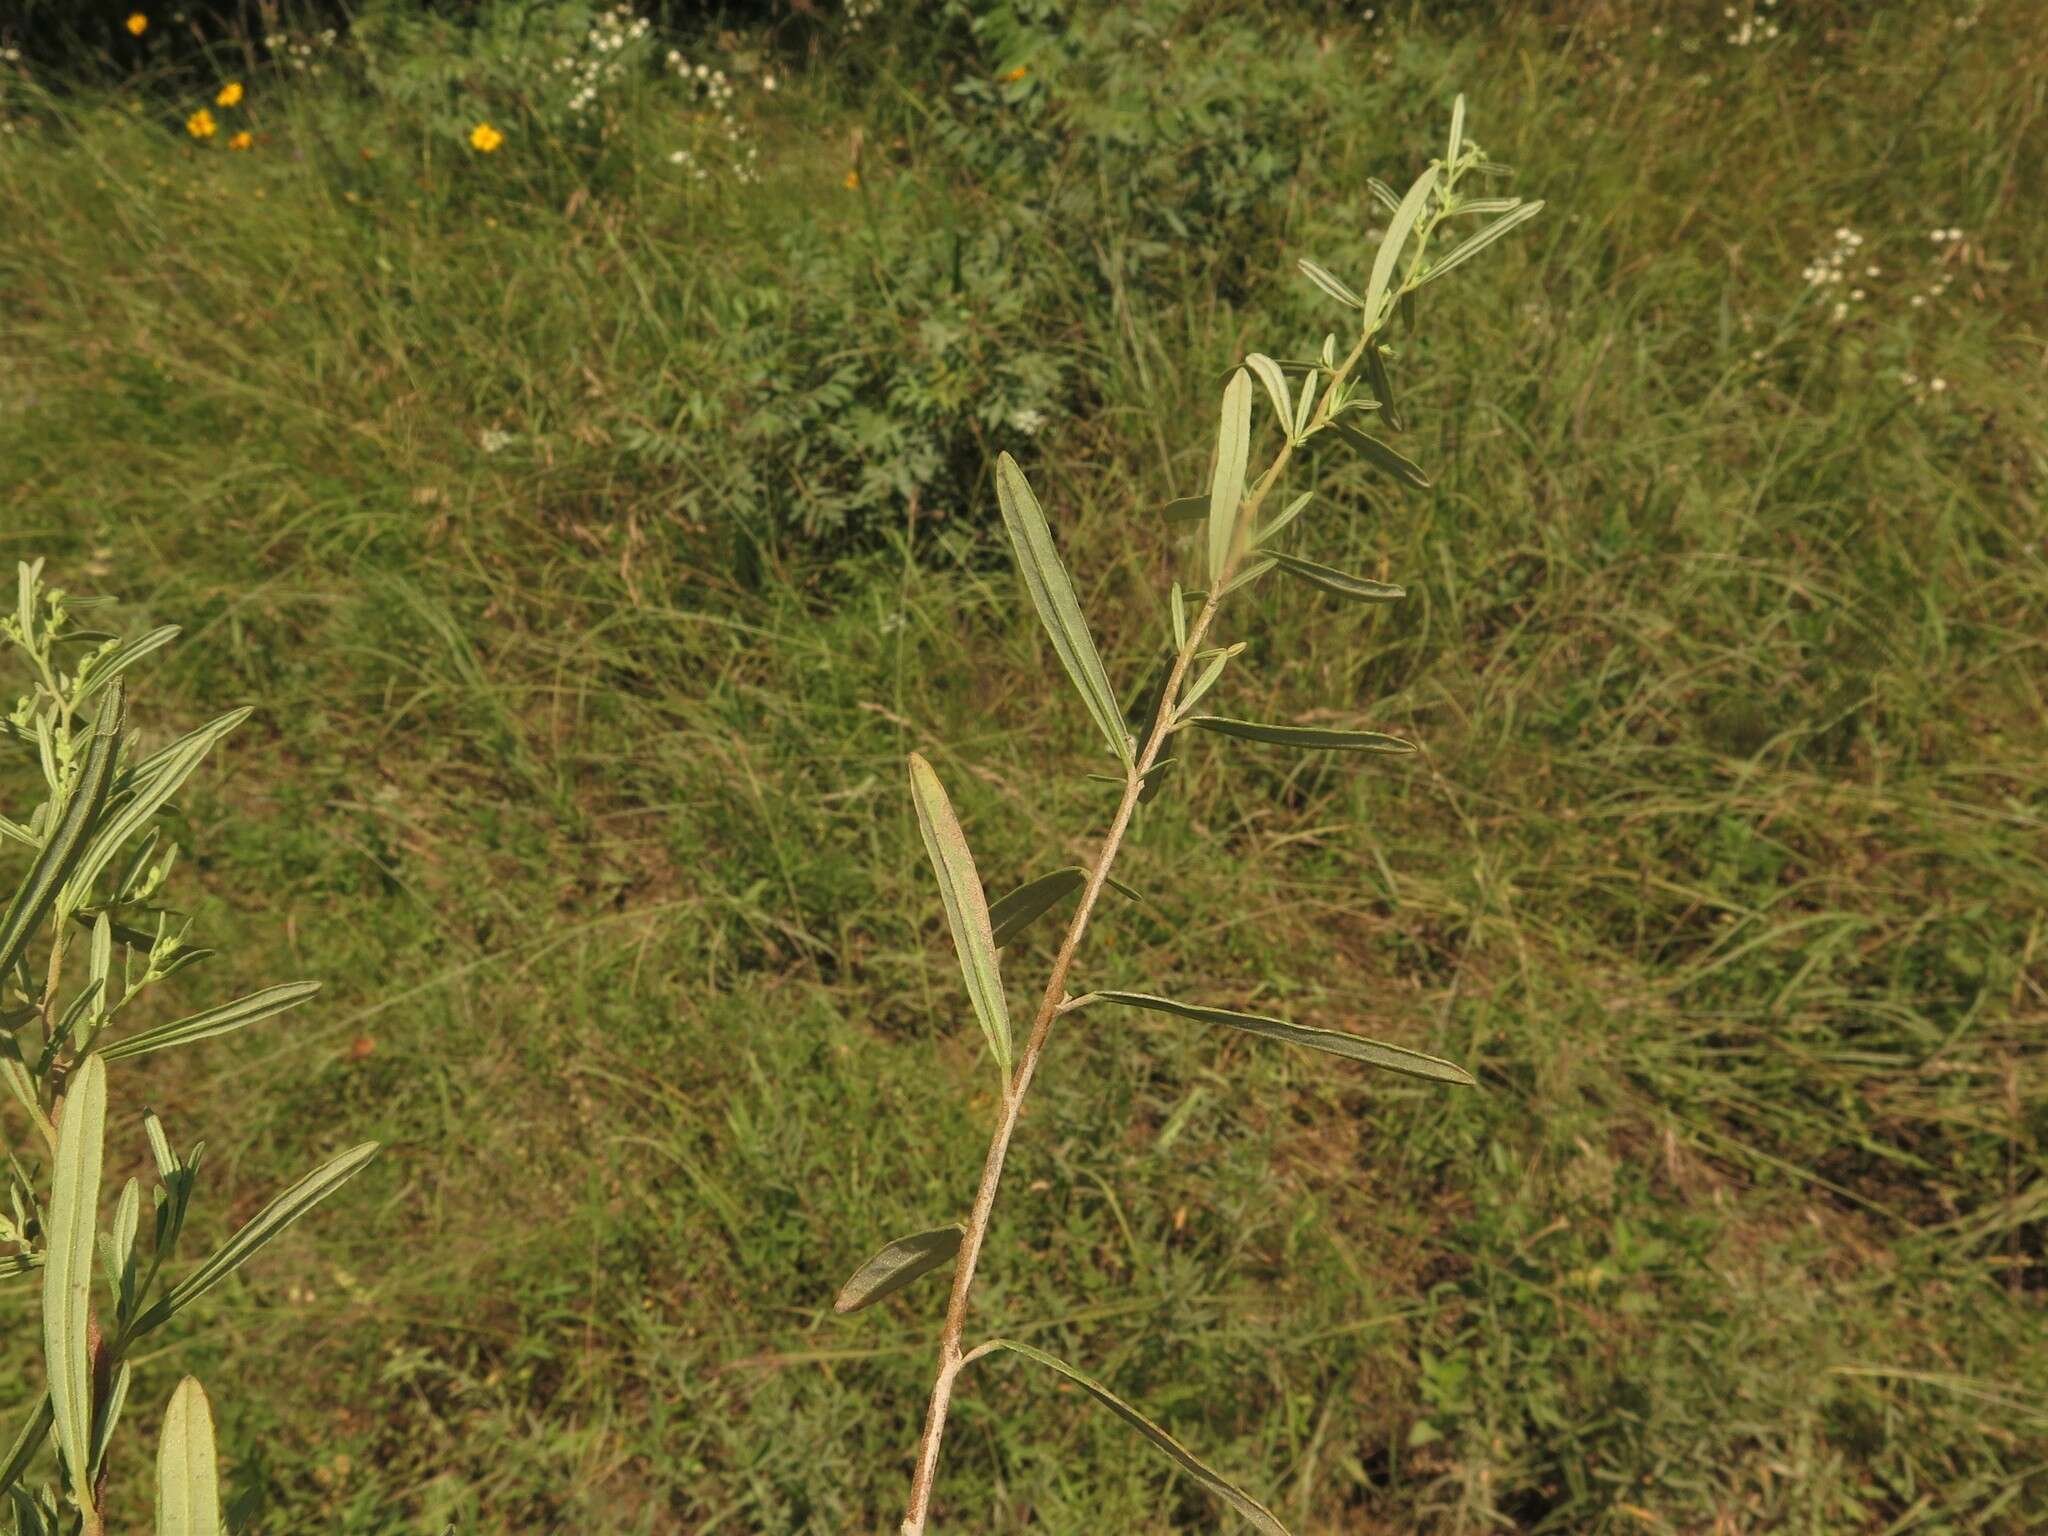 Image of Crocanthemum rosmarinifolium (Pursh) Janchen